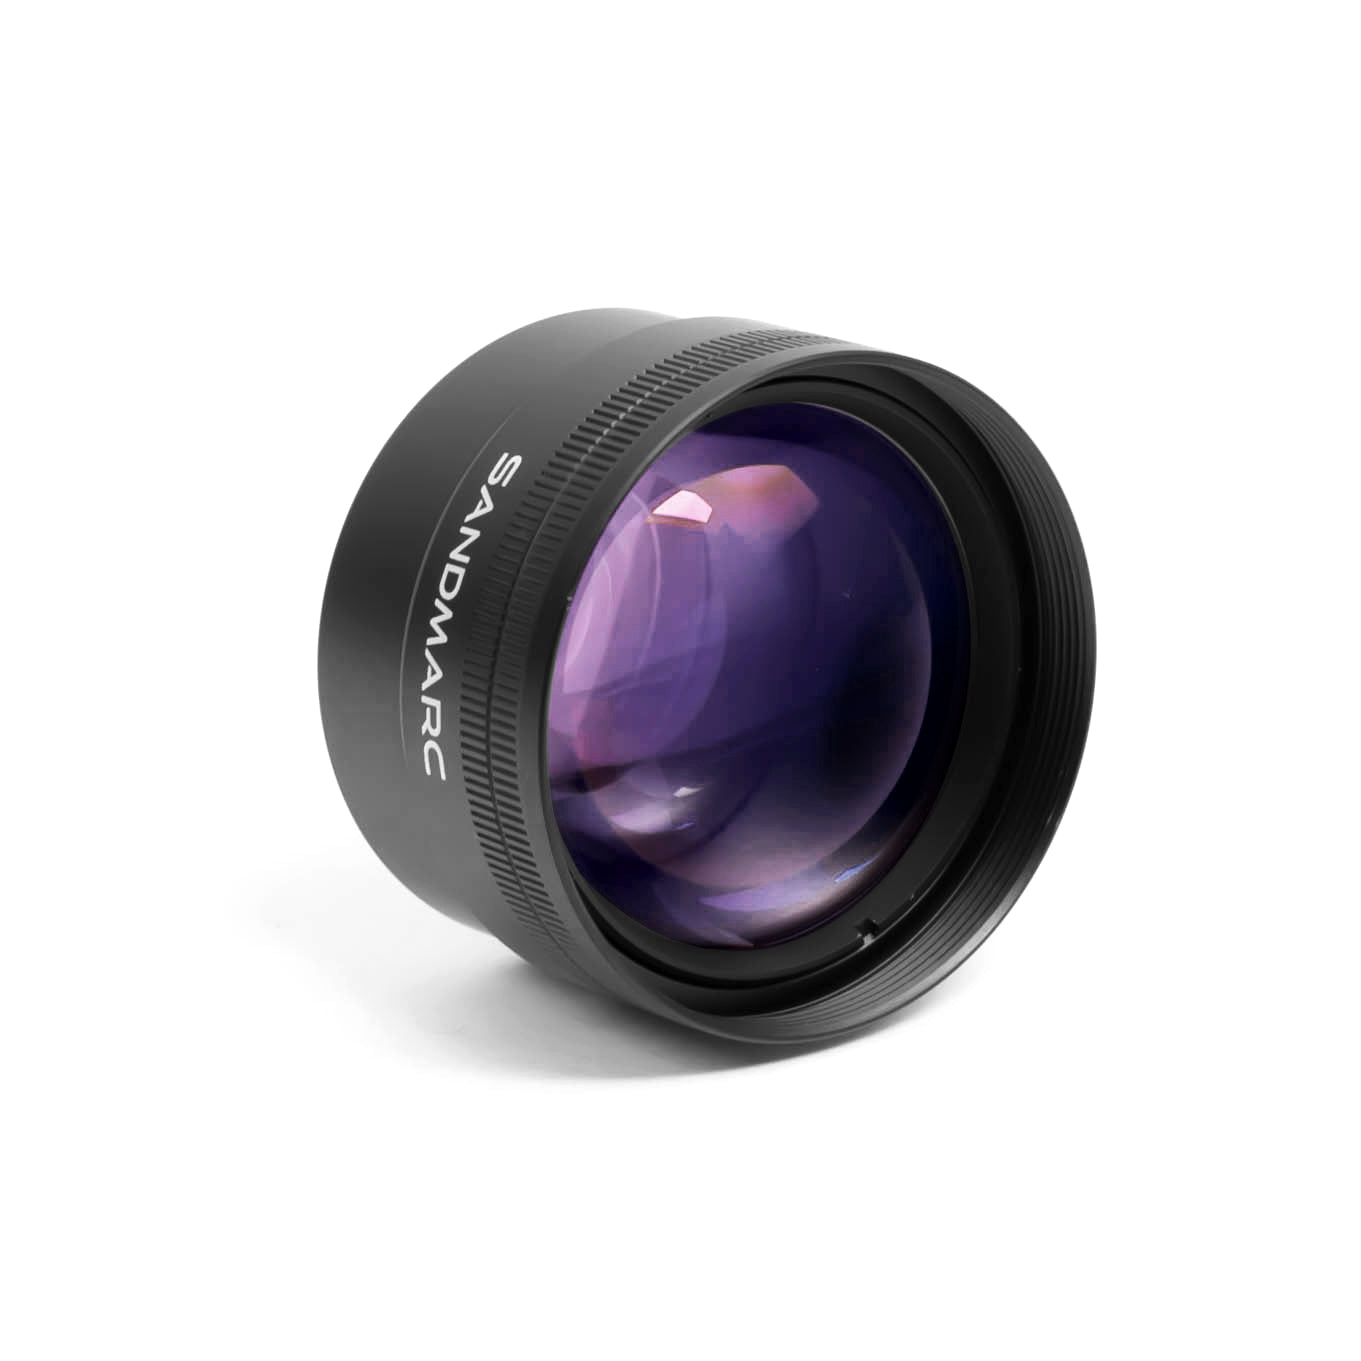 Telephoto Lens Edition - iPhone XS - SANDMARC